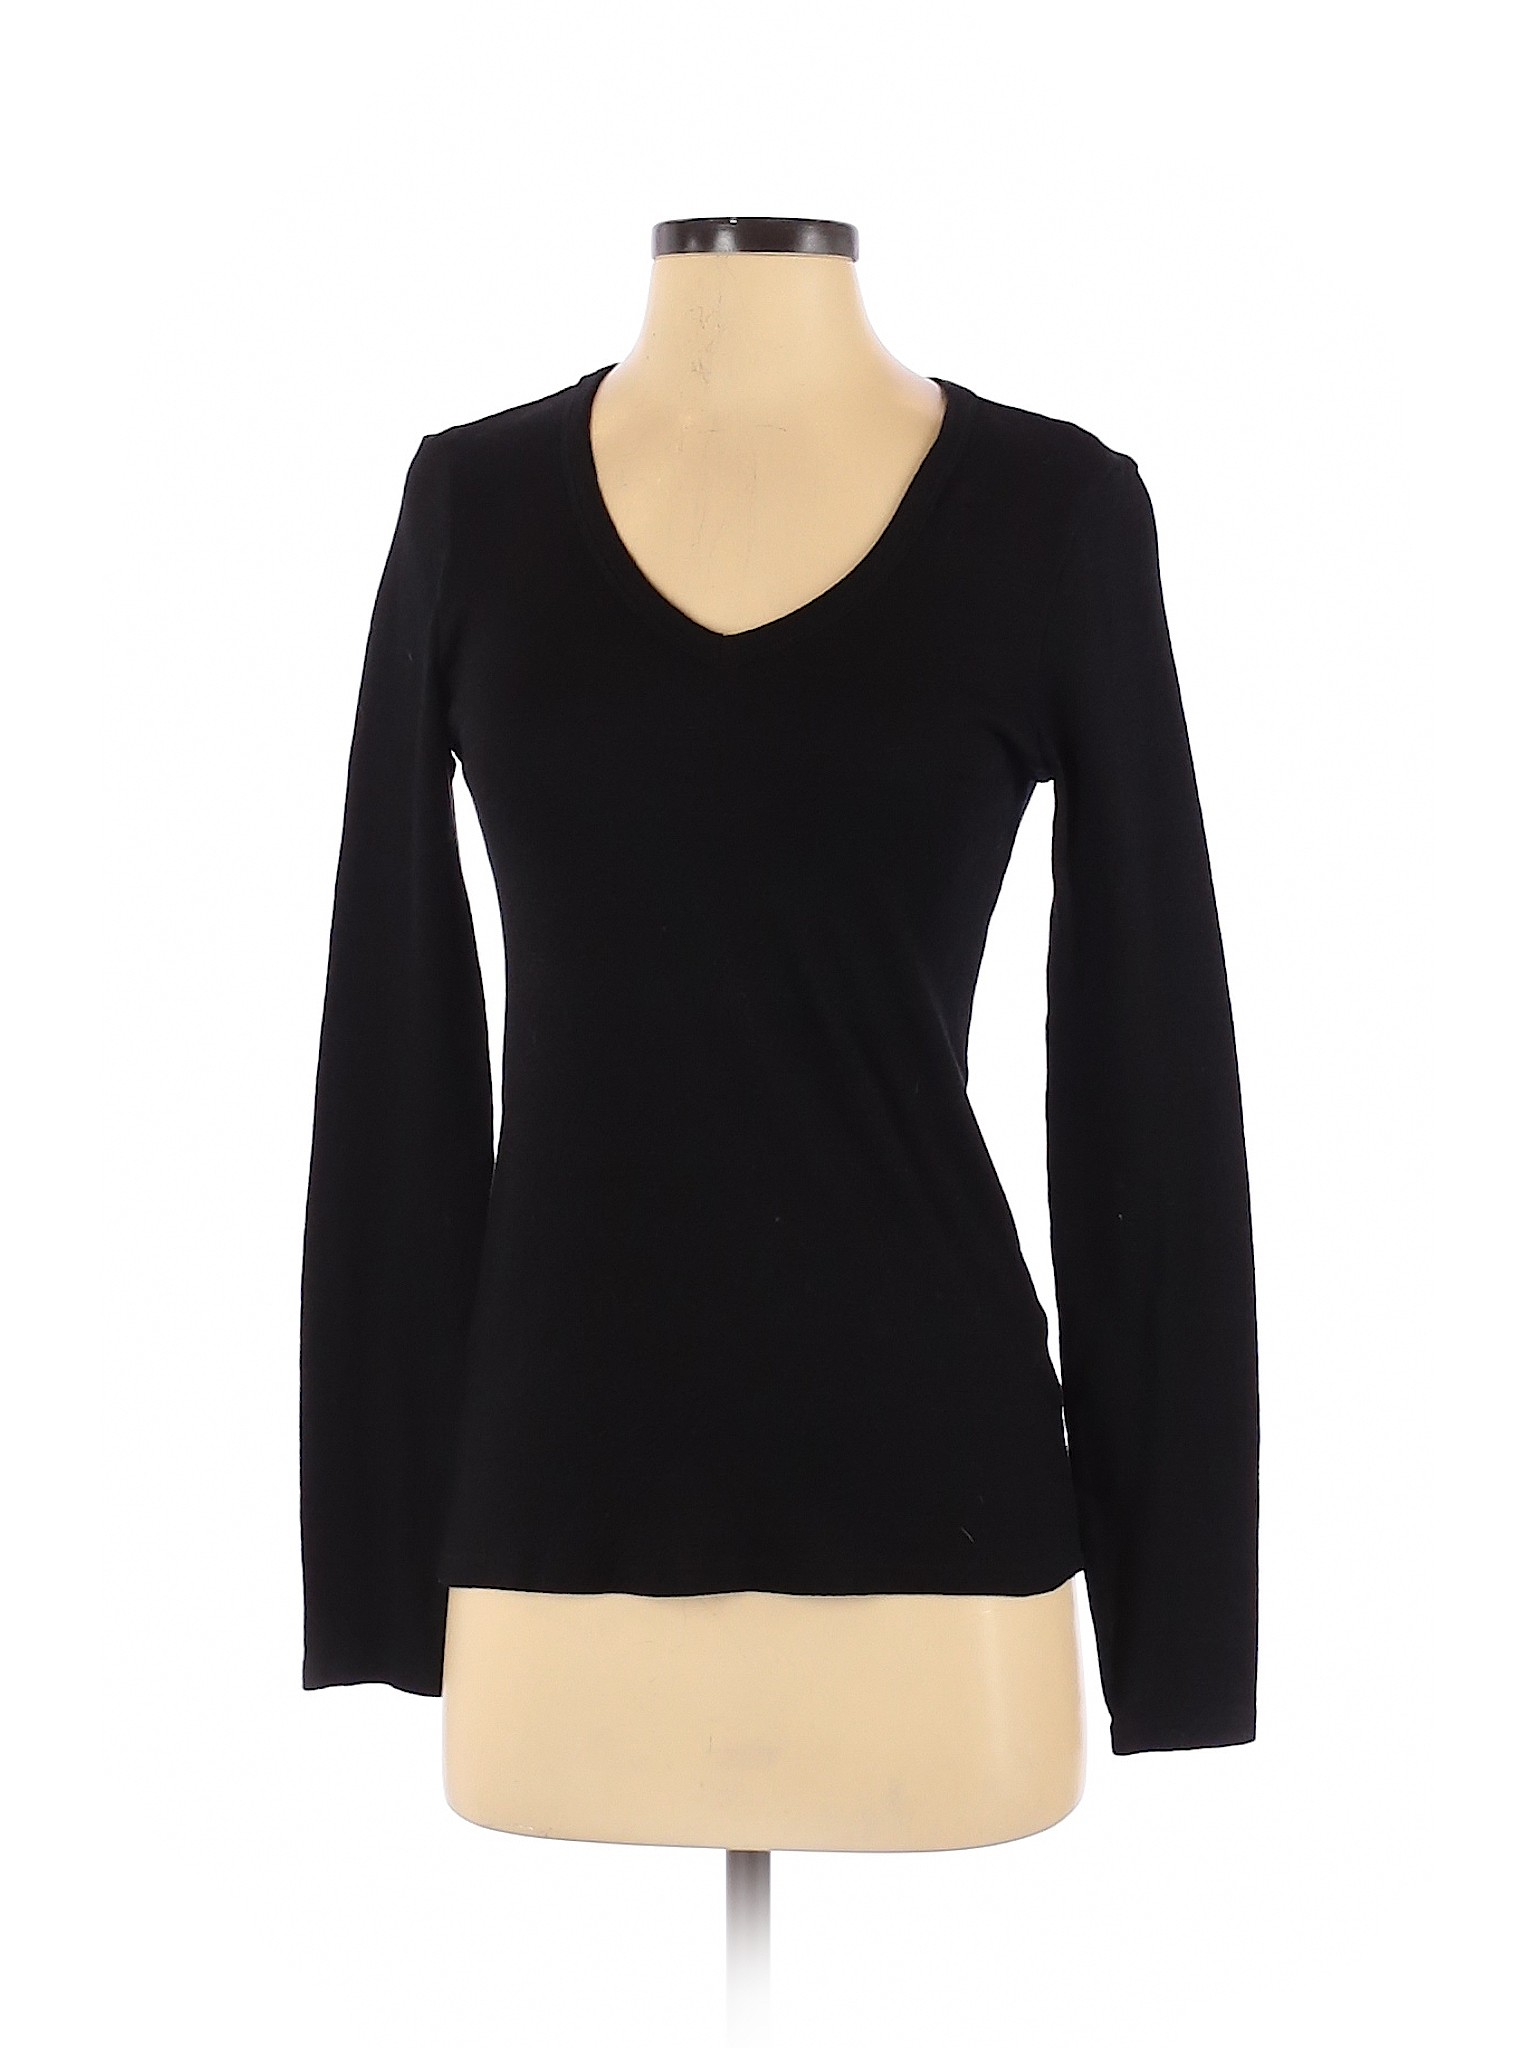 Michael Stars Women Black Long Sleeve T-Shirt XS | eBay